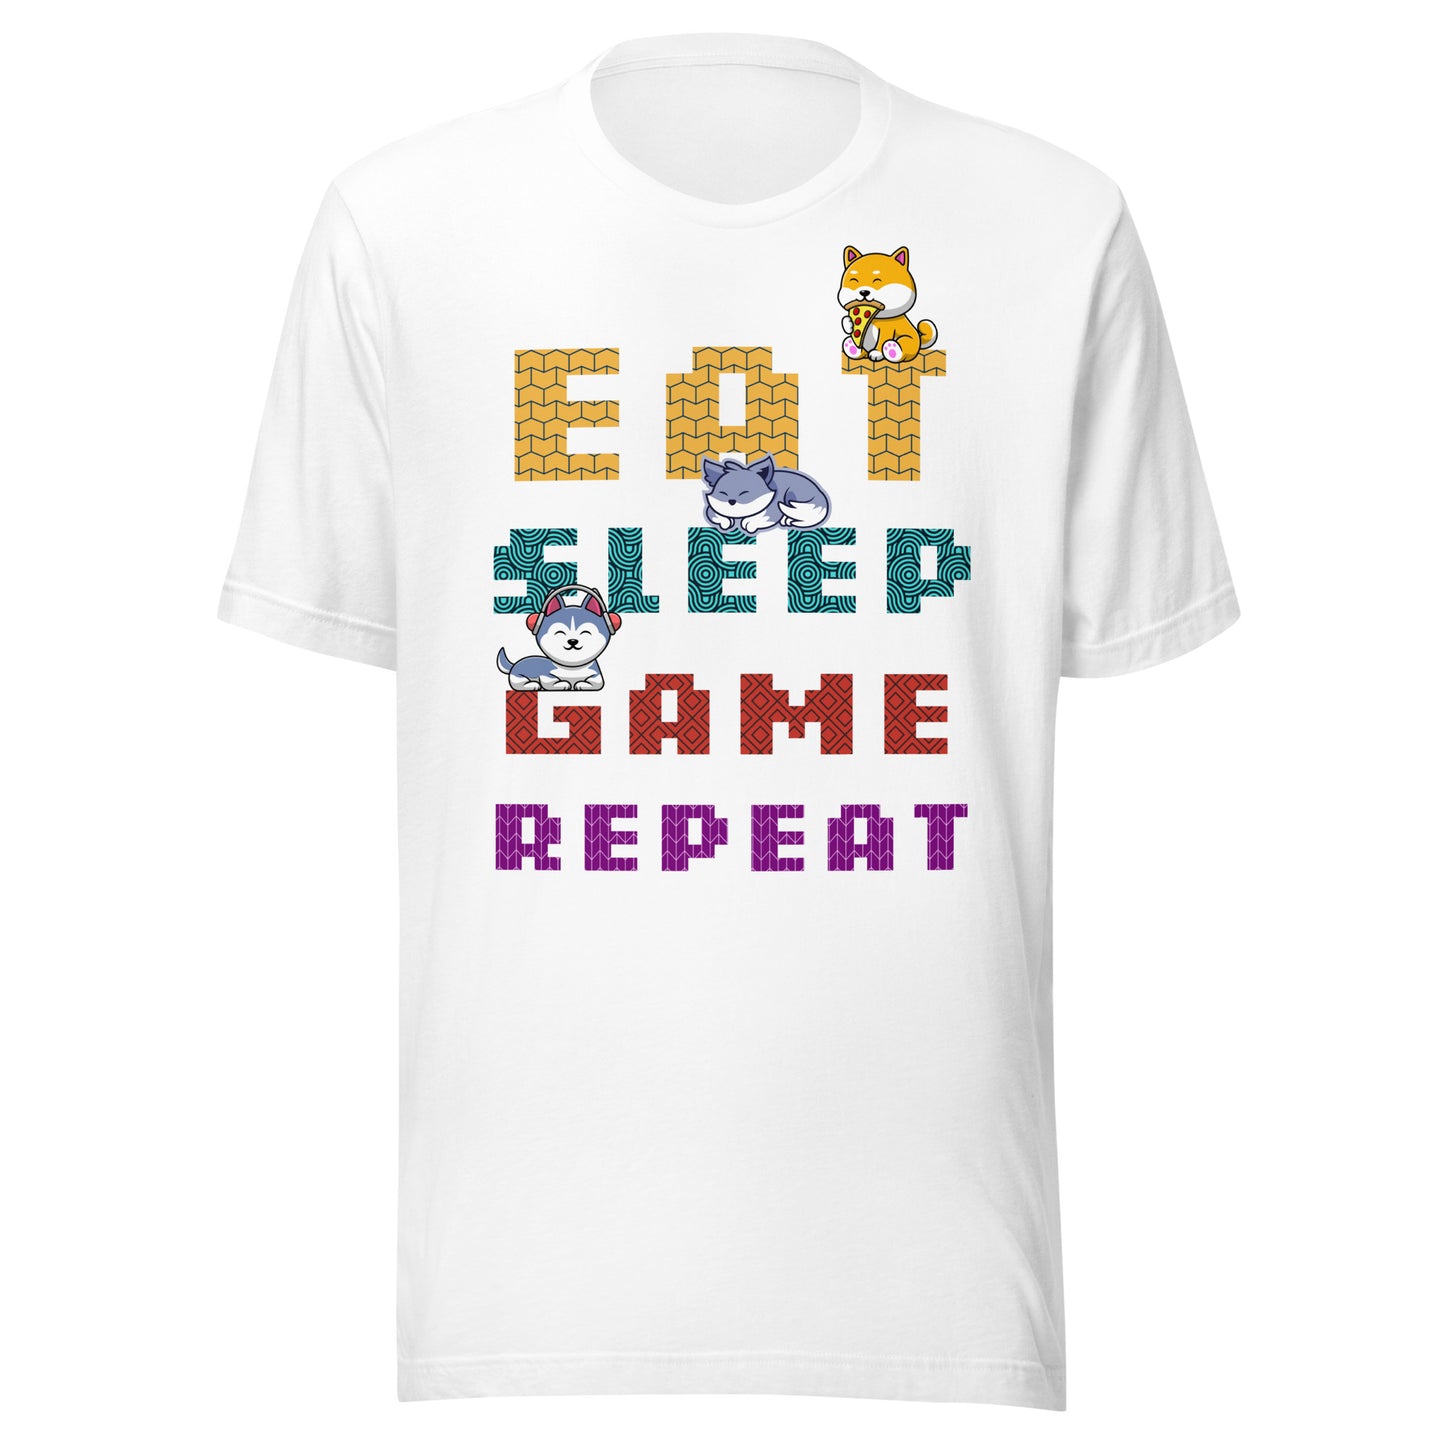 Eat, Sleep, Game, Repeat T-Shirt